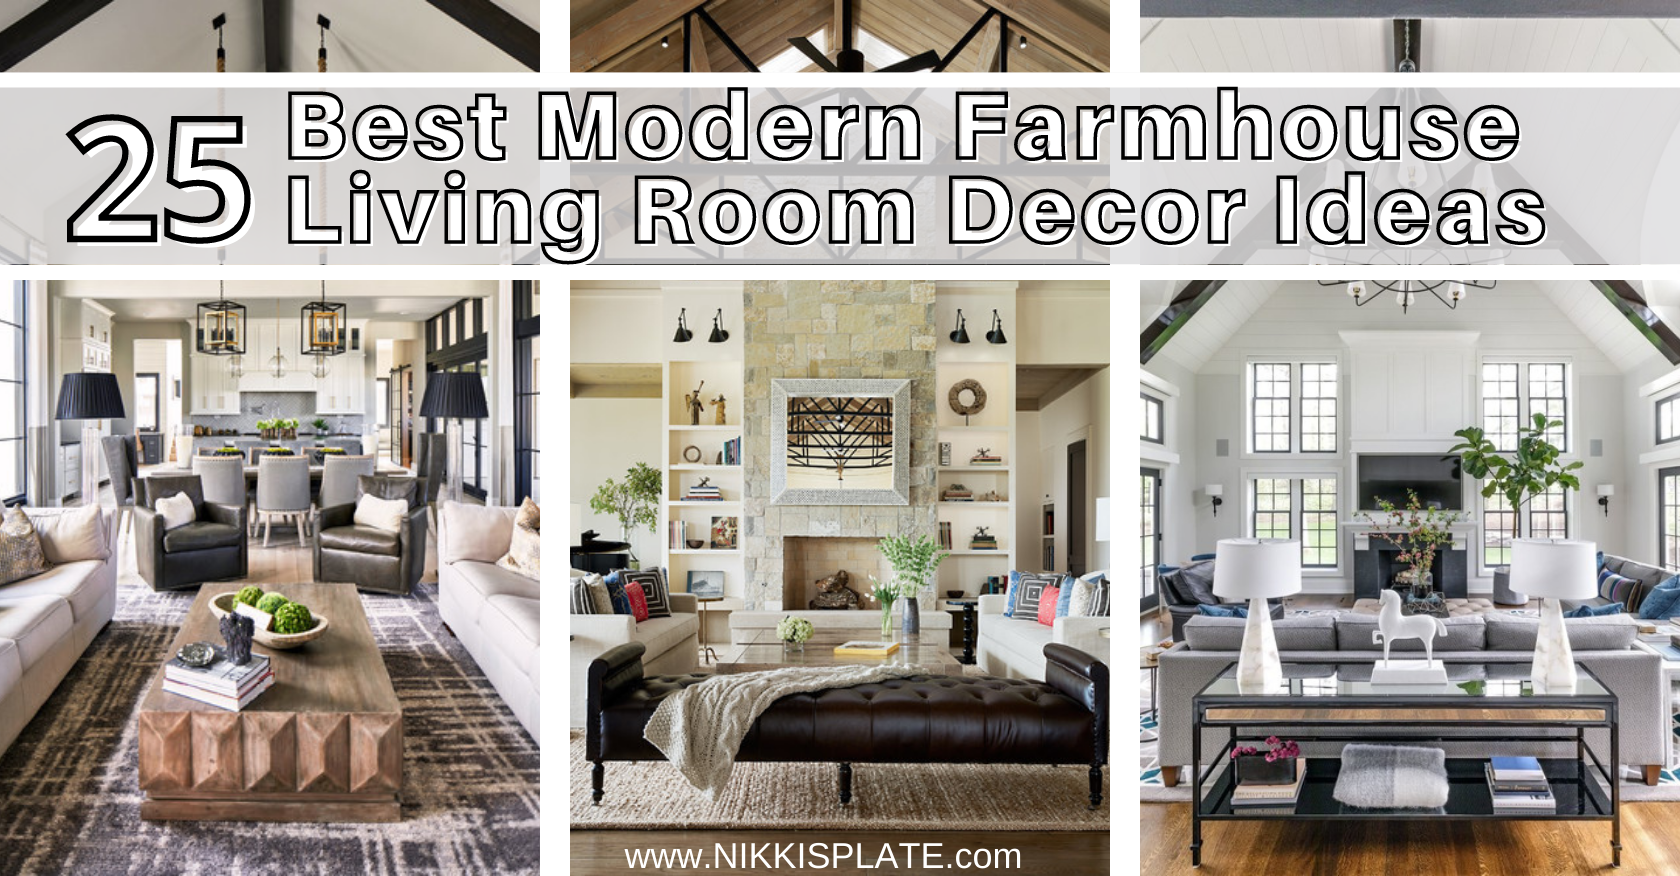 25 Best Modern Farmhouse Living Room Decor Ideas - Nikki's Plate